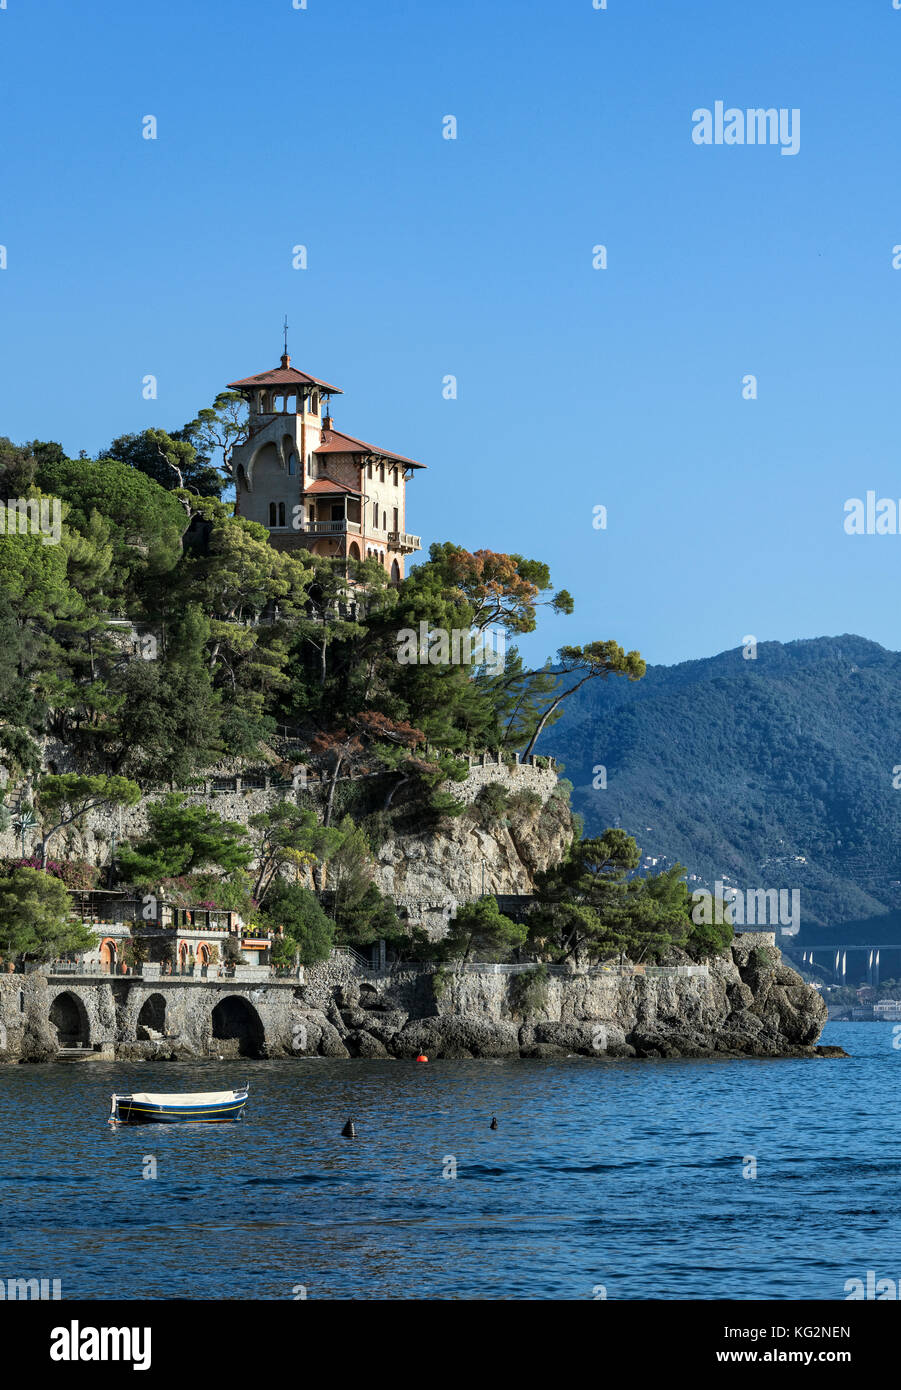 Maison front de mer pittoresque, Portofino, ligurie, italie. Banque D'Images